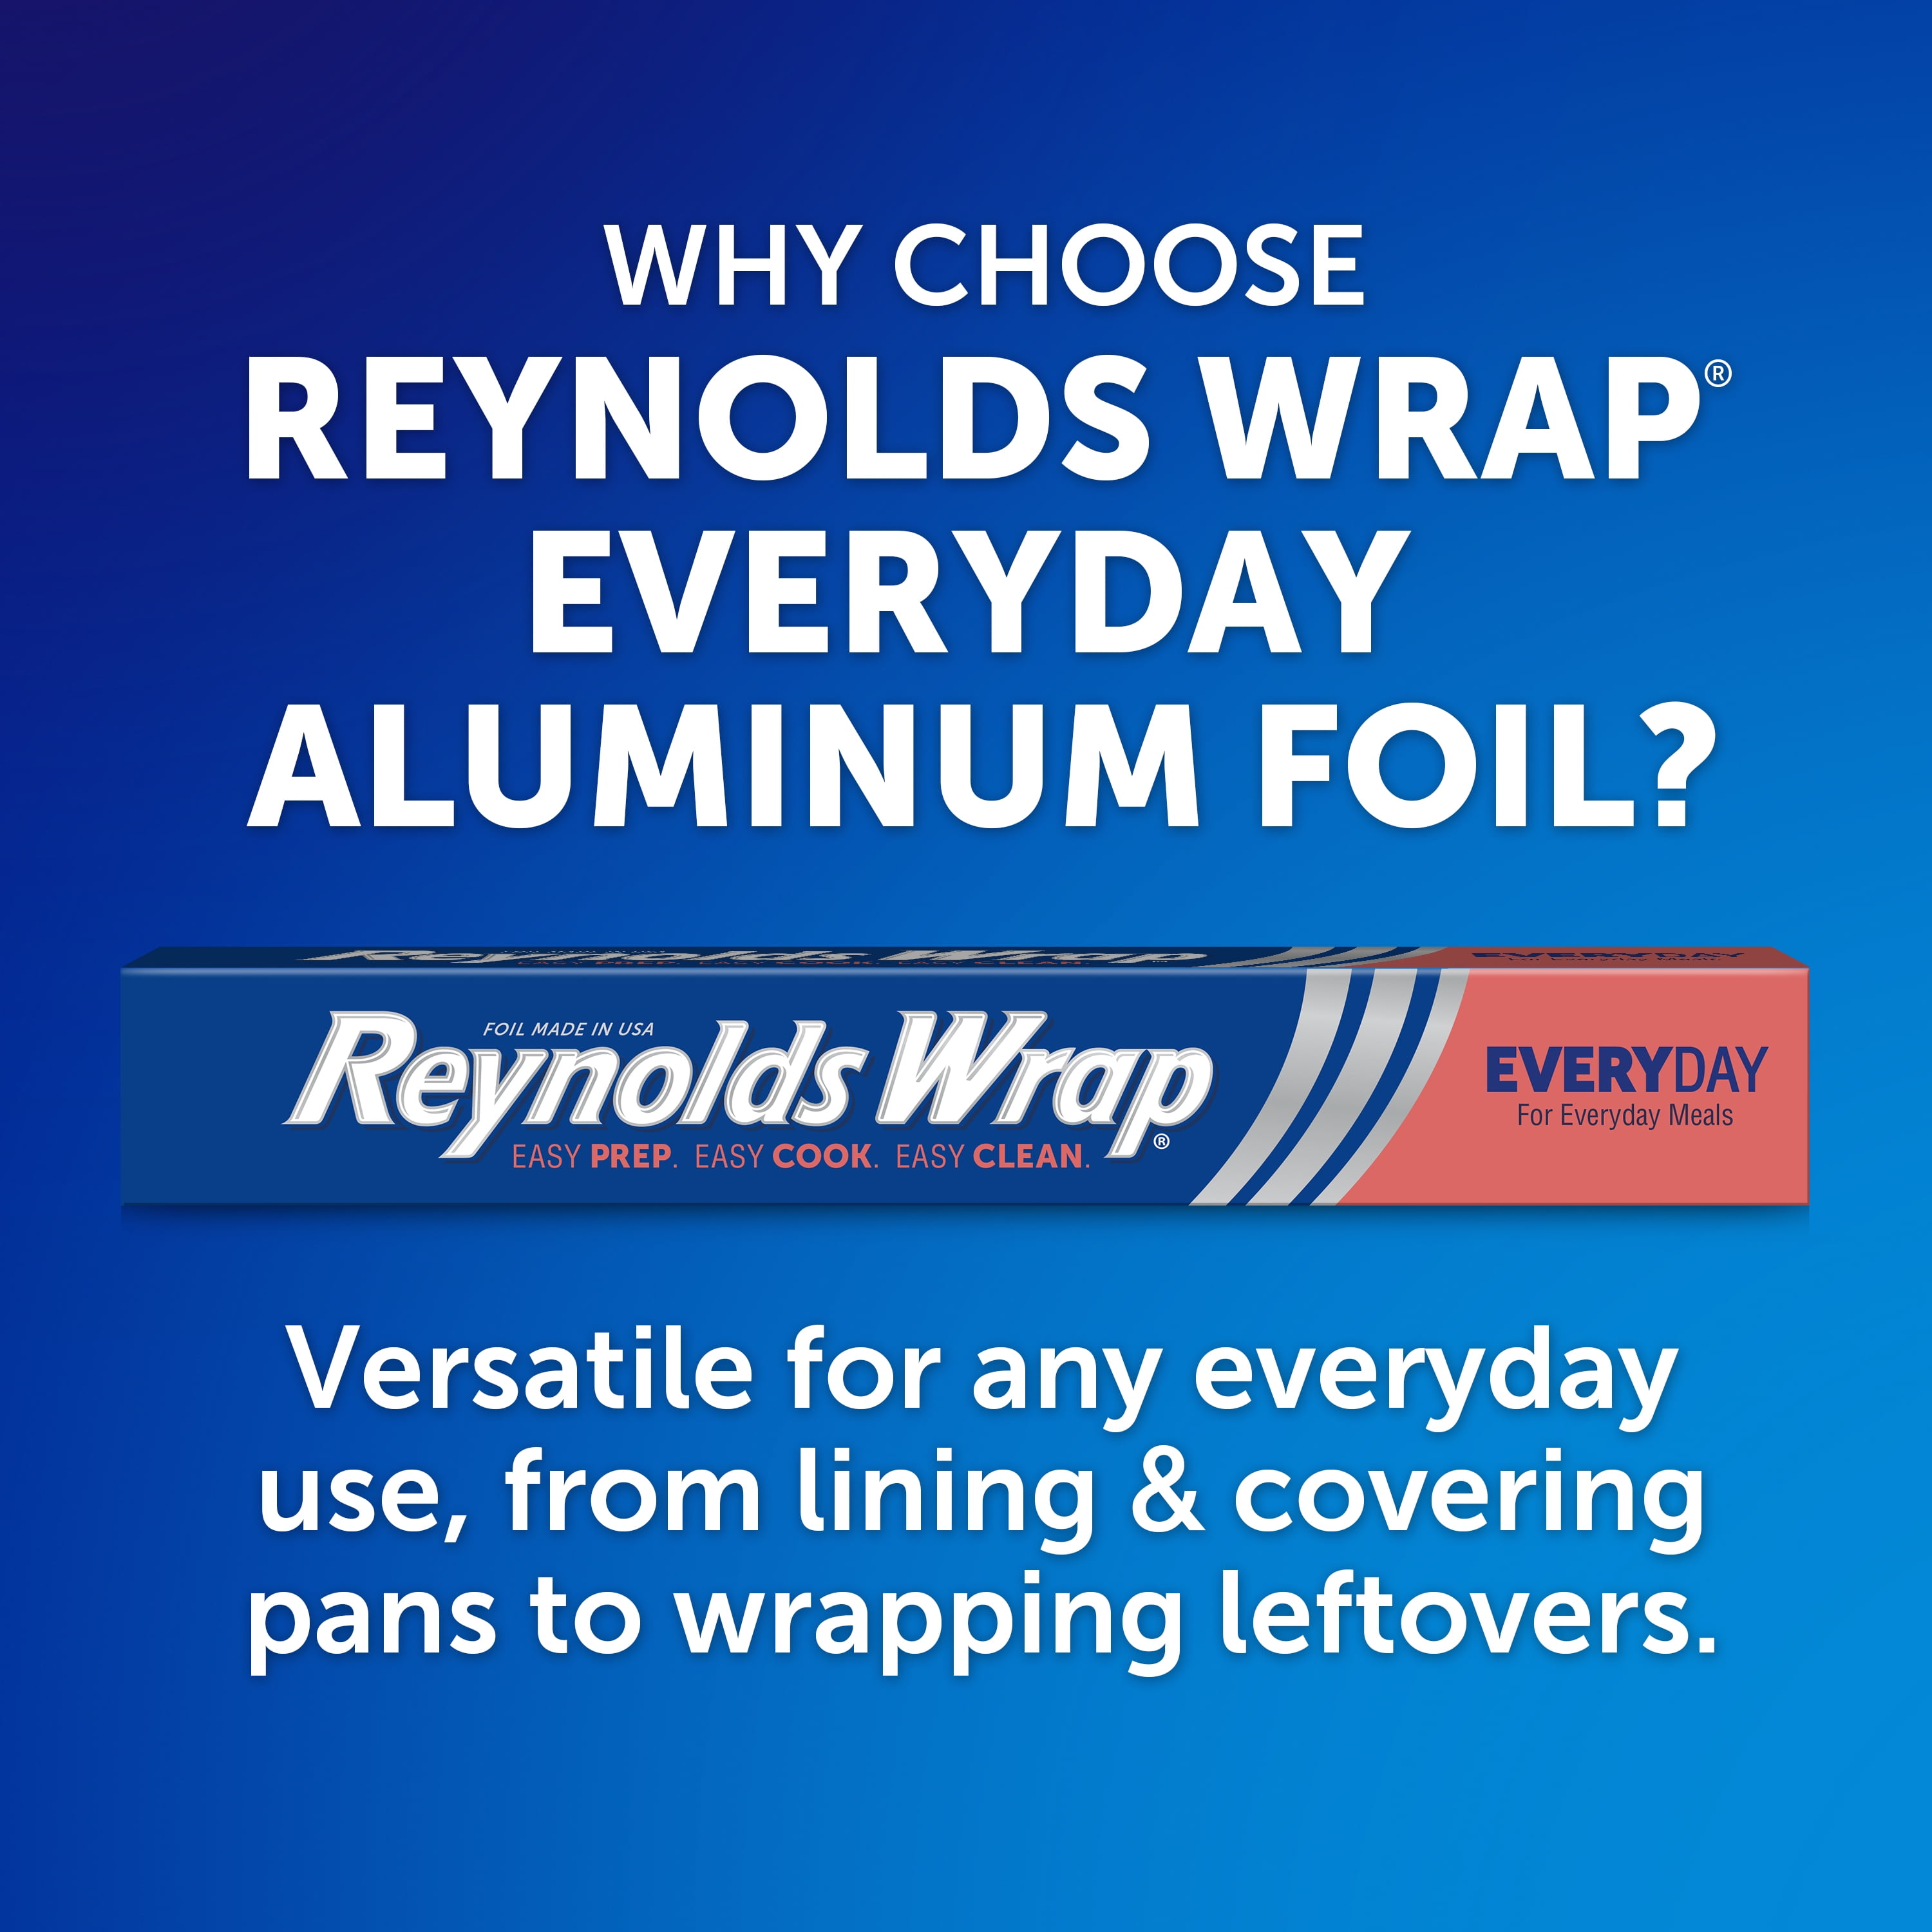 Reynolds Wrap 12 Standard Foil, 250 sq. ft. (2 ct.) – My Kosher Cart